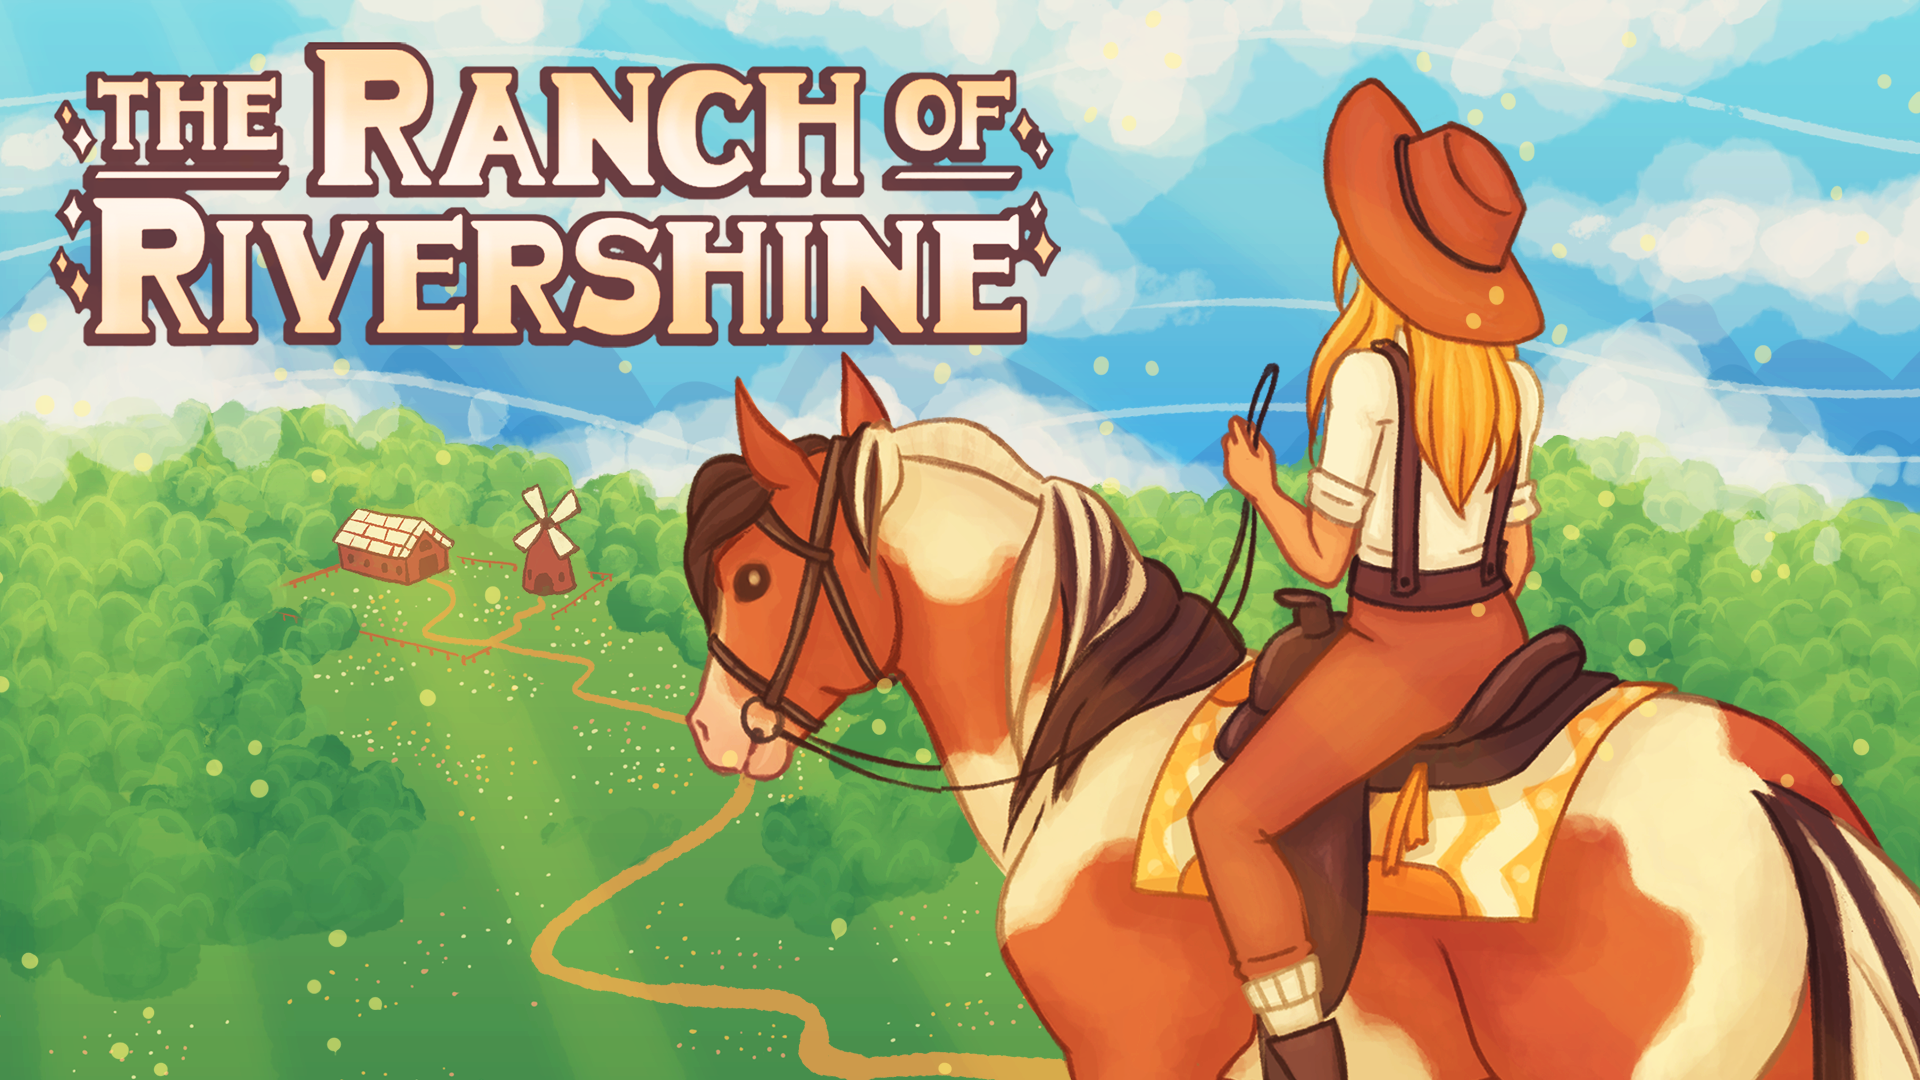 Игра the Ranch of Rivershine. Игра про ранчо с лошадьми. Ранчо Мистраль. Игра детектив про лошадей.